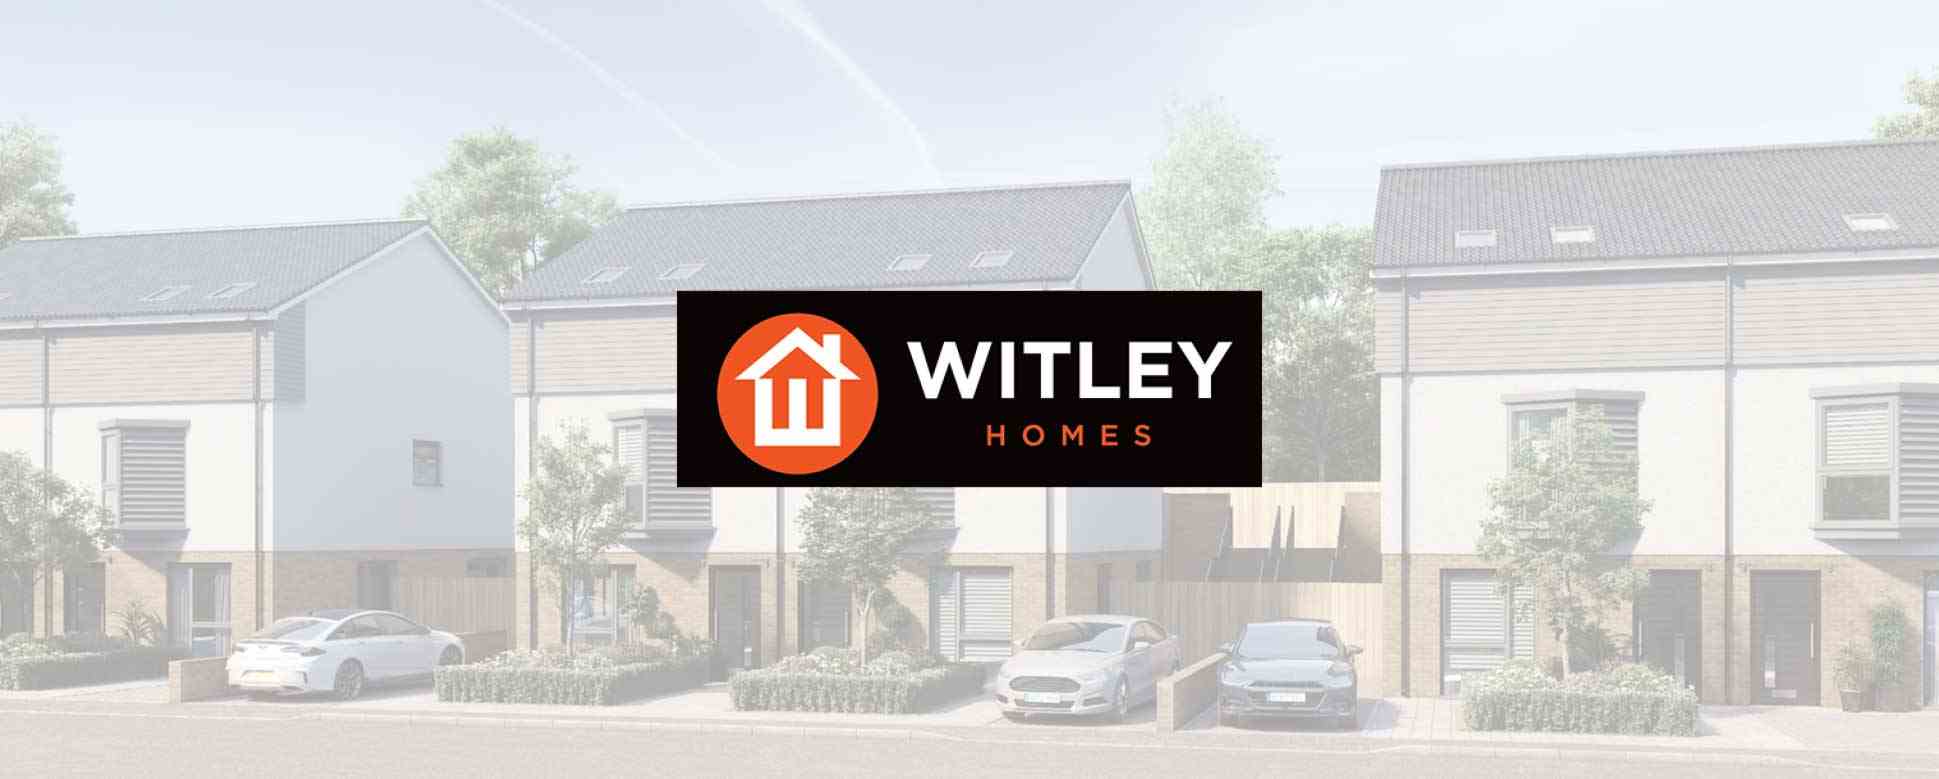 Meet the Developer – Witley Homes